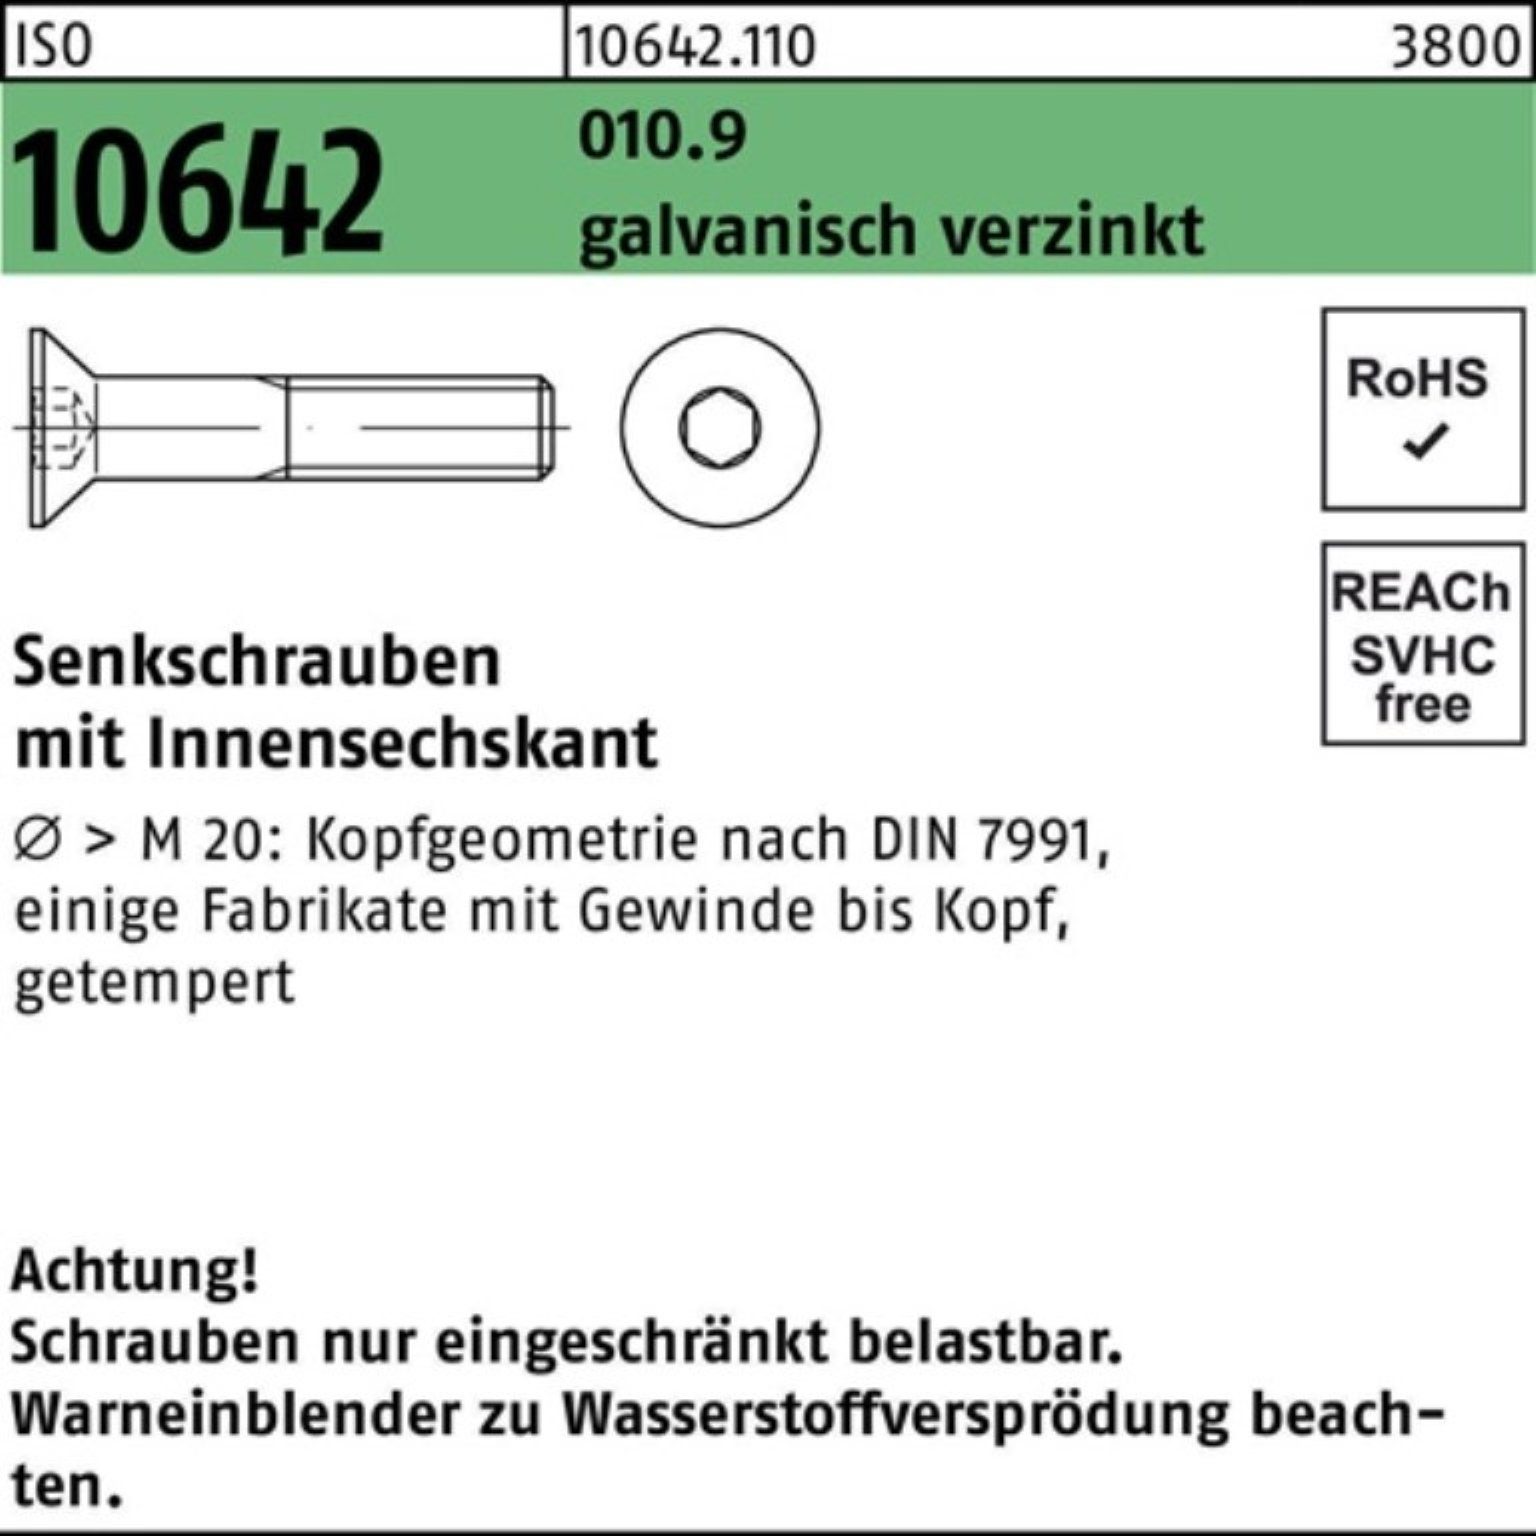 Reyher Senkschraube 500er Pack Senkschraube ISO 10642 Innen-6kt M4x 8 010.9 galv.verz. 500